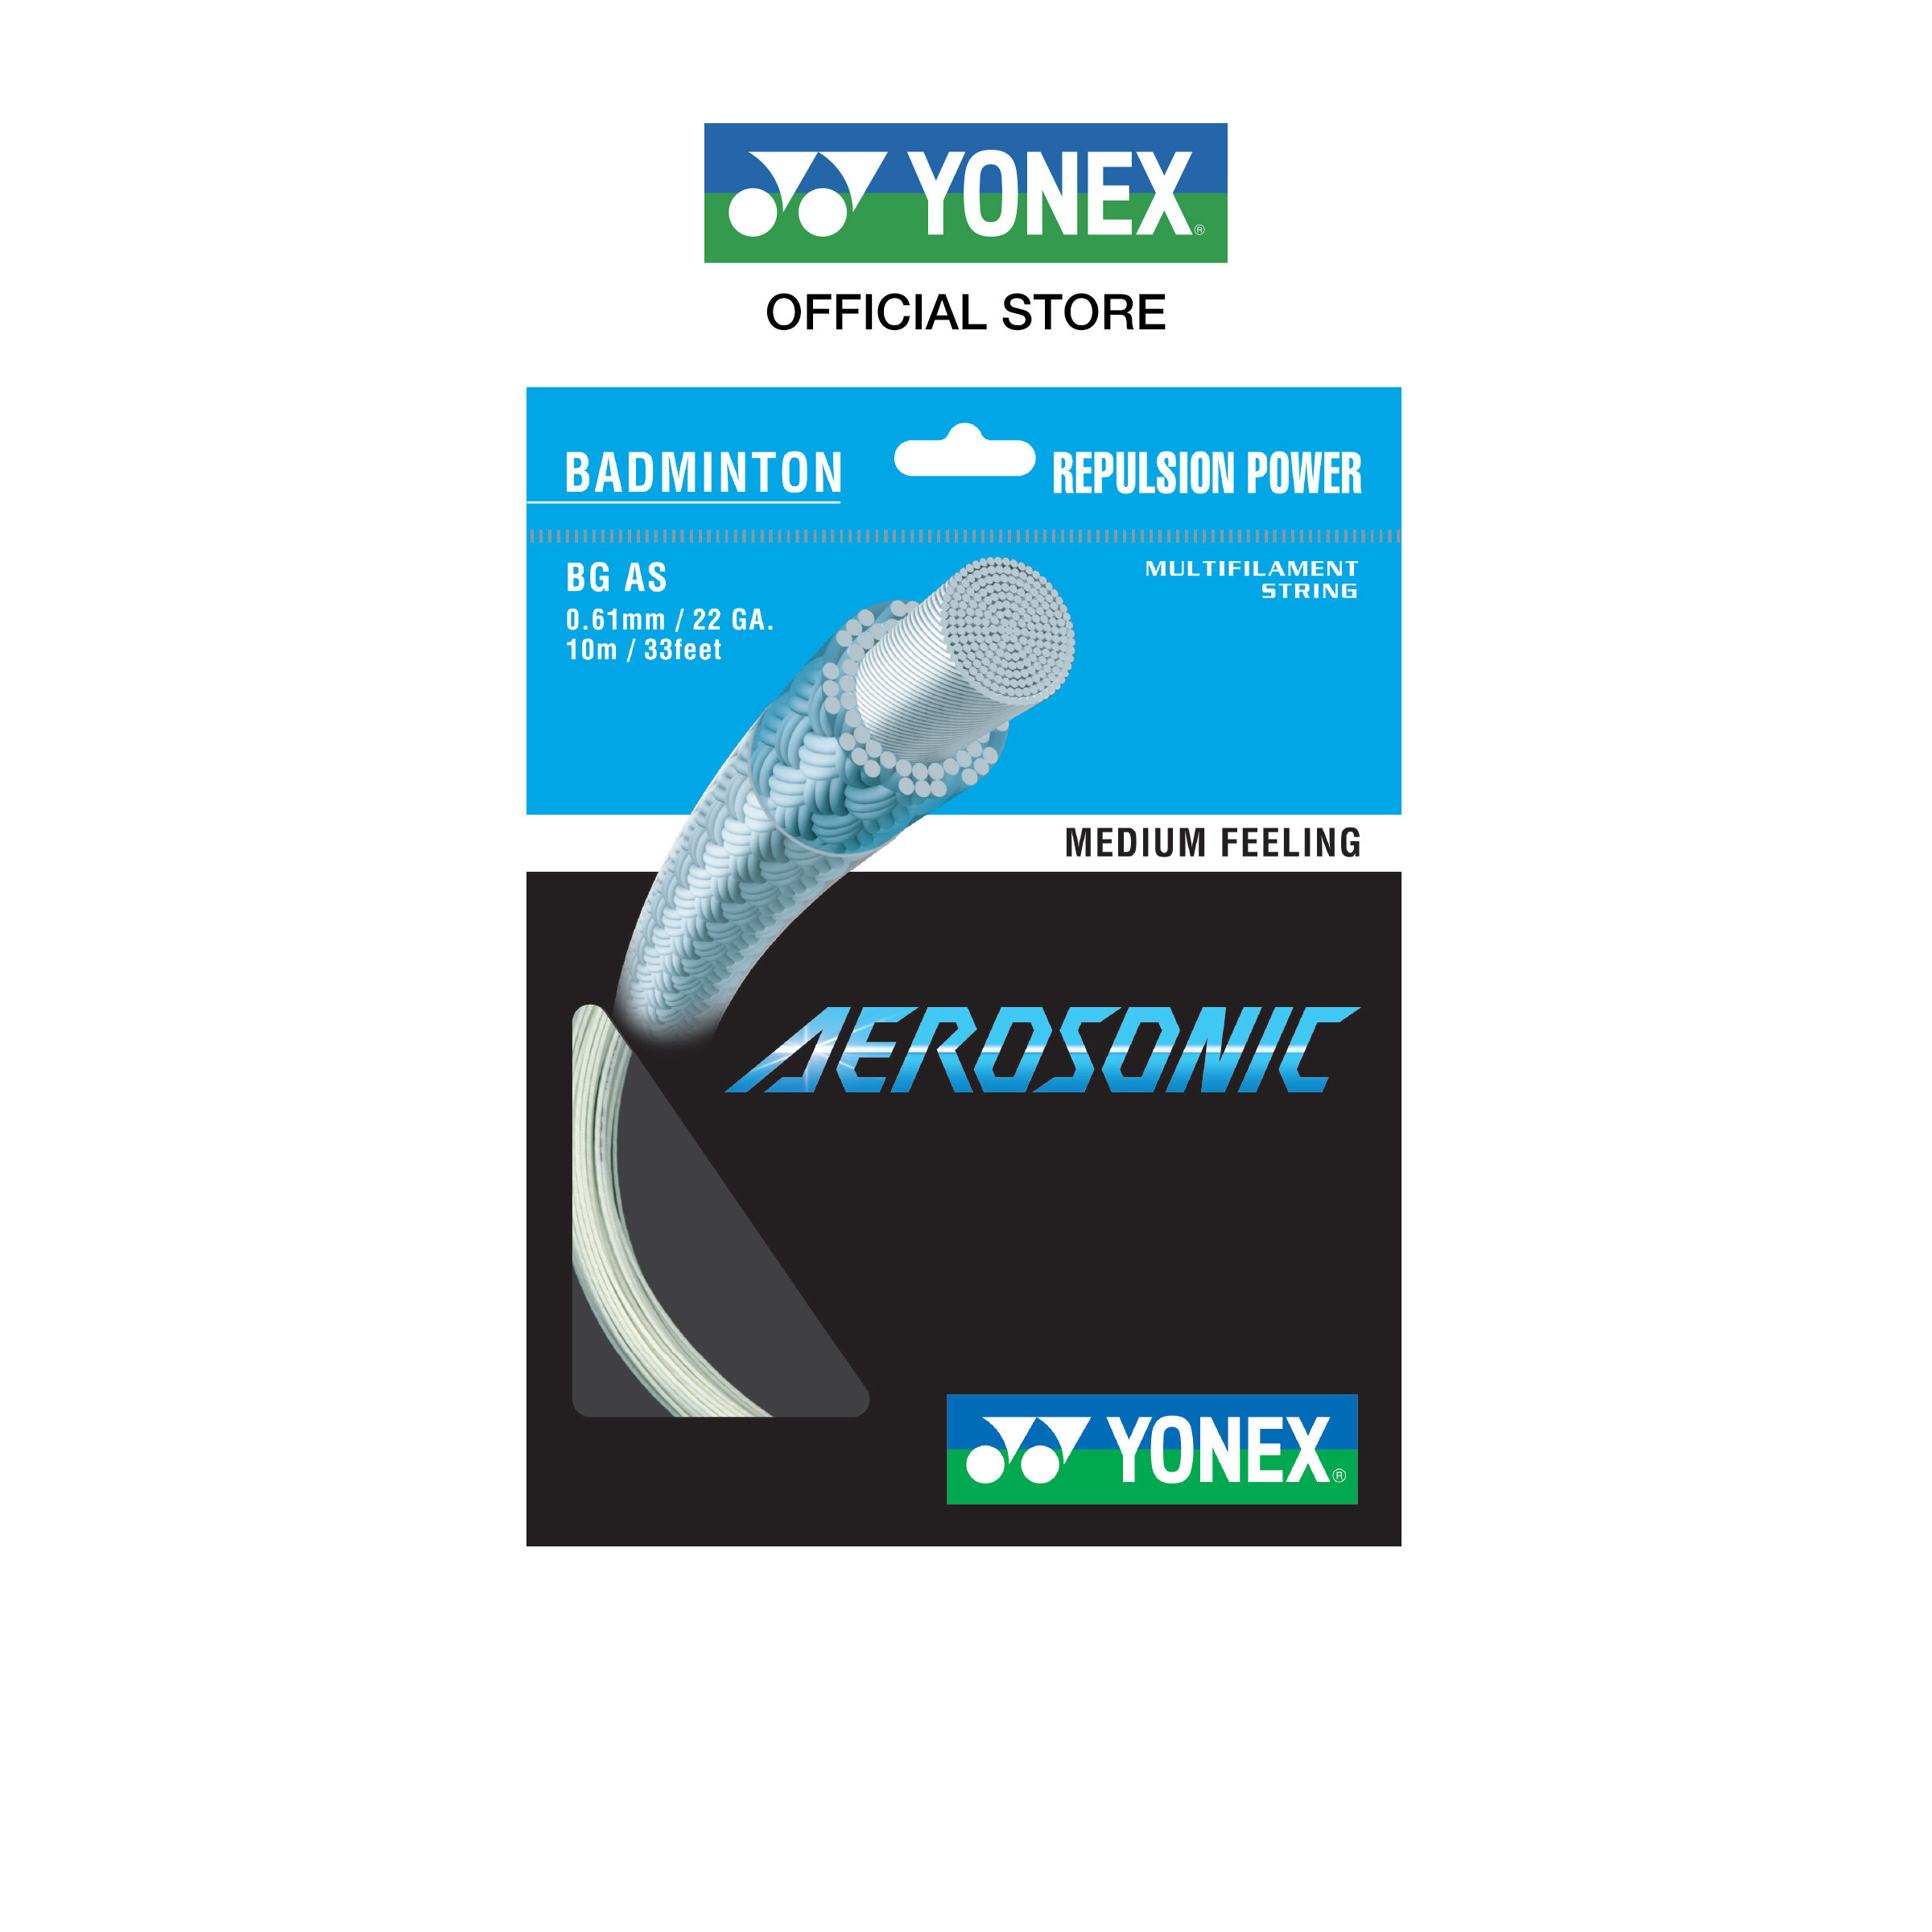 YONEX รุ่น AEROSONIC เอ็นแบดมินตัน เส้นใยถักขนาด 0.61 มม. ผลิตประเทศญี่ปุ่น เอ็นที่บางที่สุดในโลก ผู้ที่ต้องการแรงดีดสูง